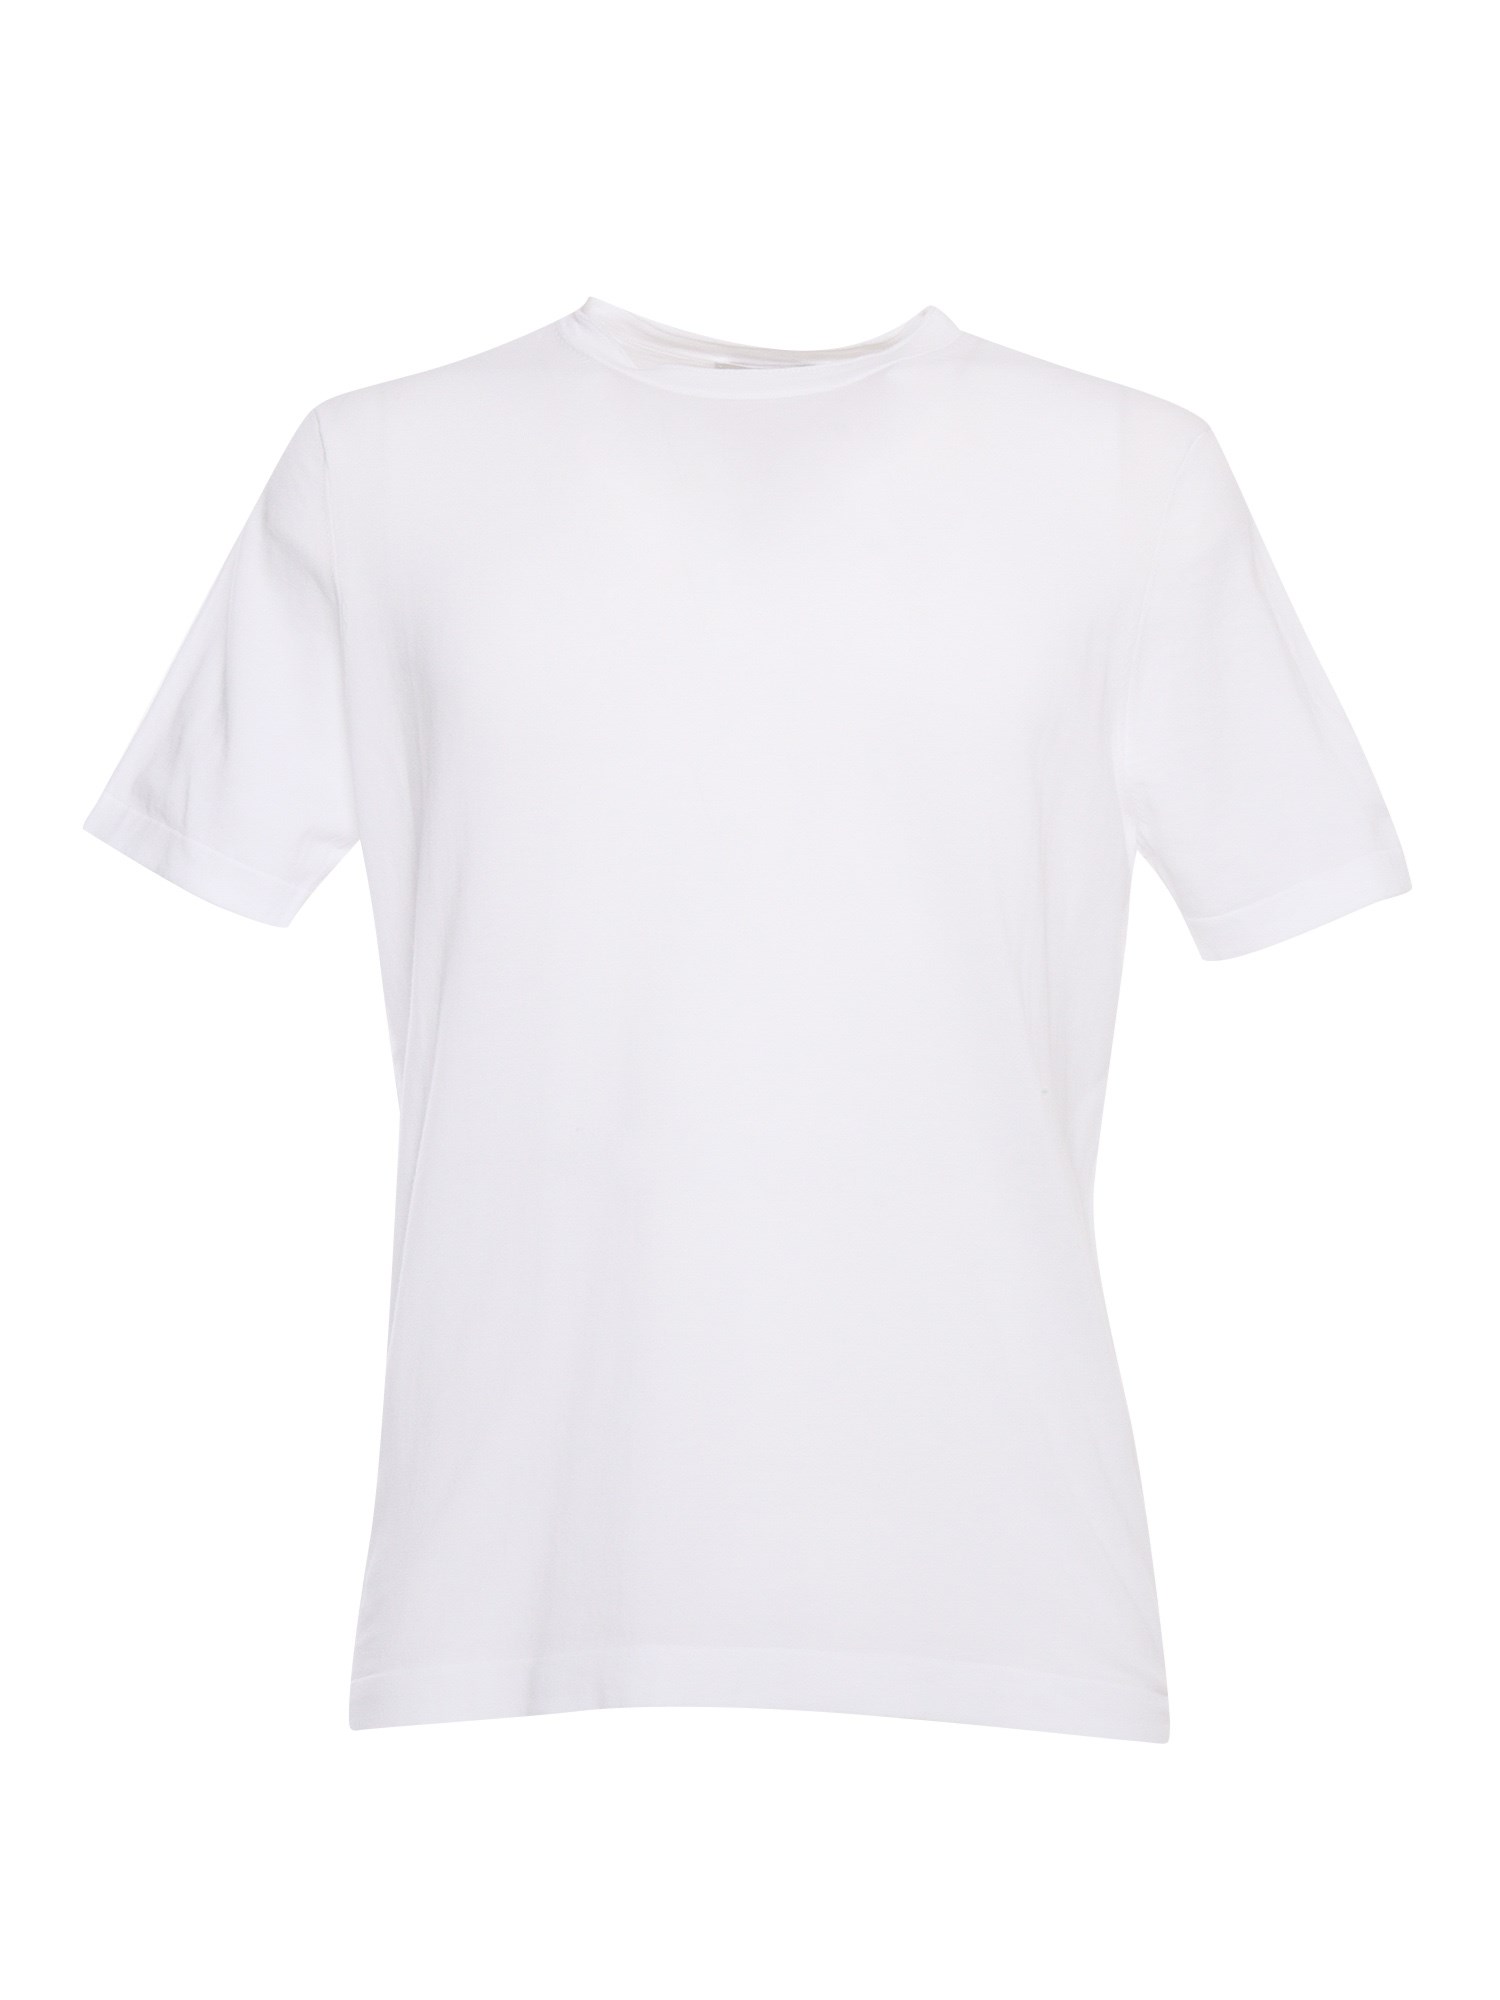 Shop Kangra Cashmere White T-shirt